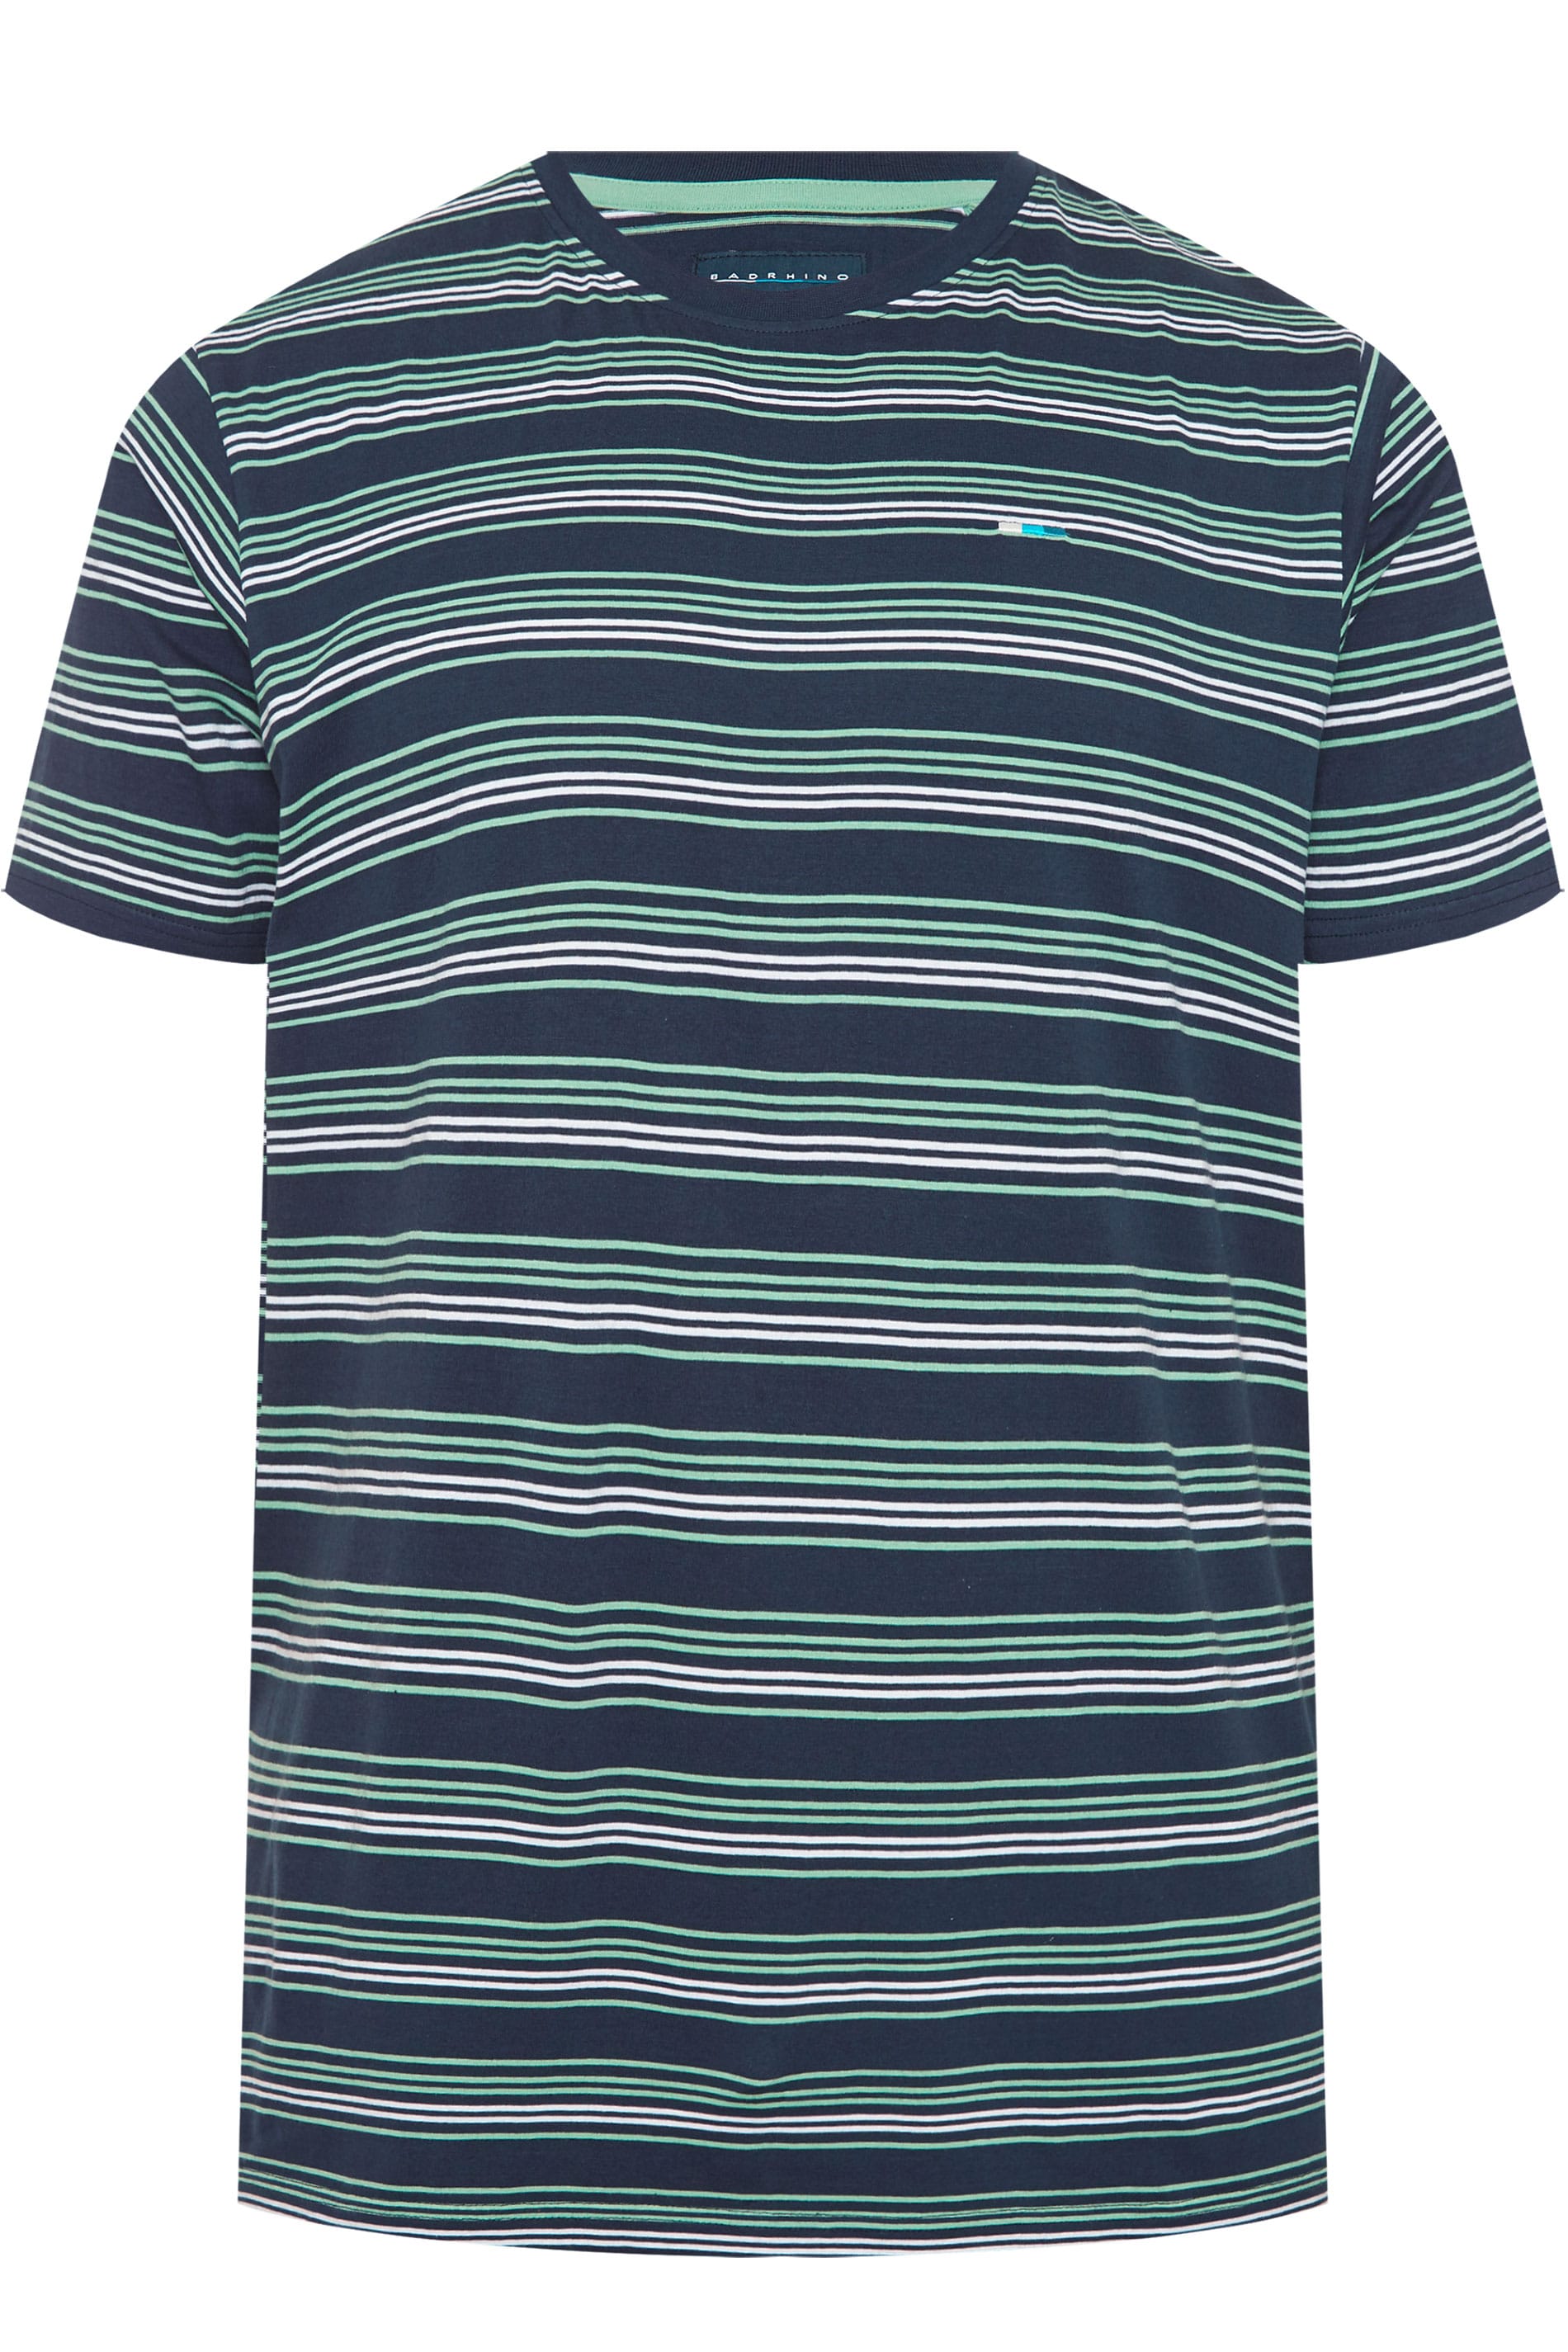 BadRhino Big & Tall Navy Blue & Green Stripe T-Shirt 1